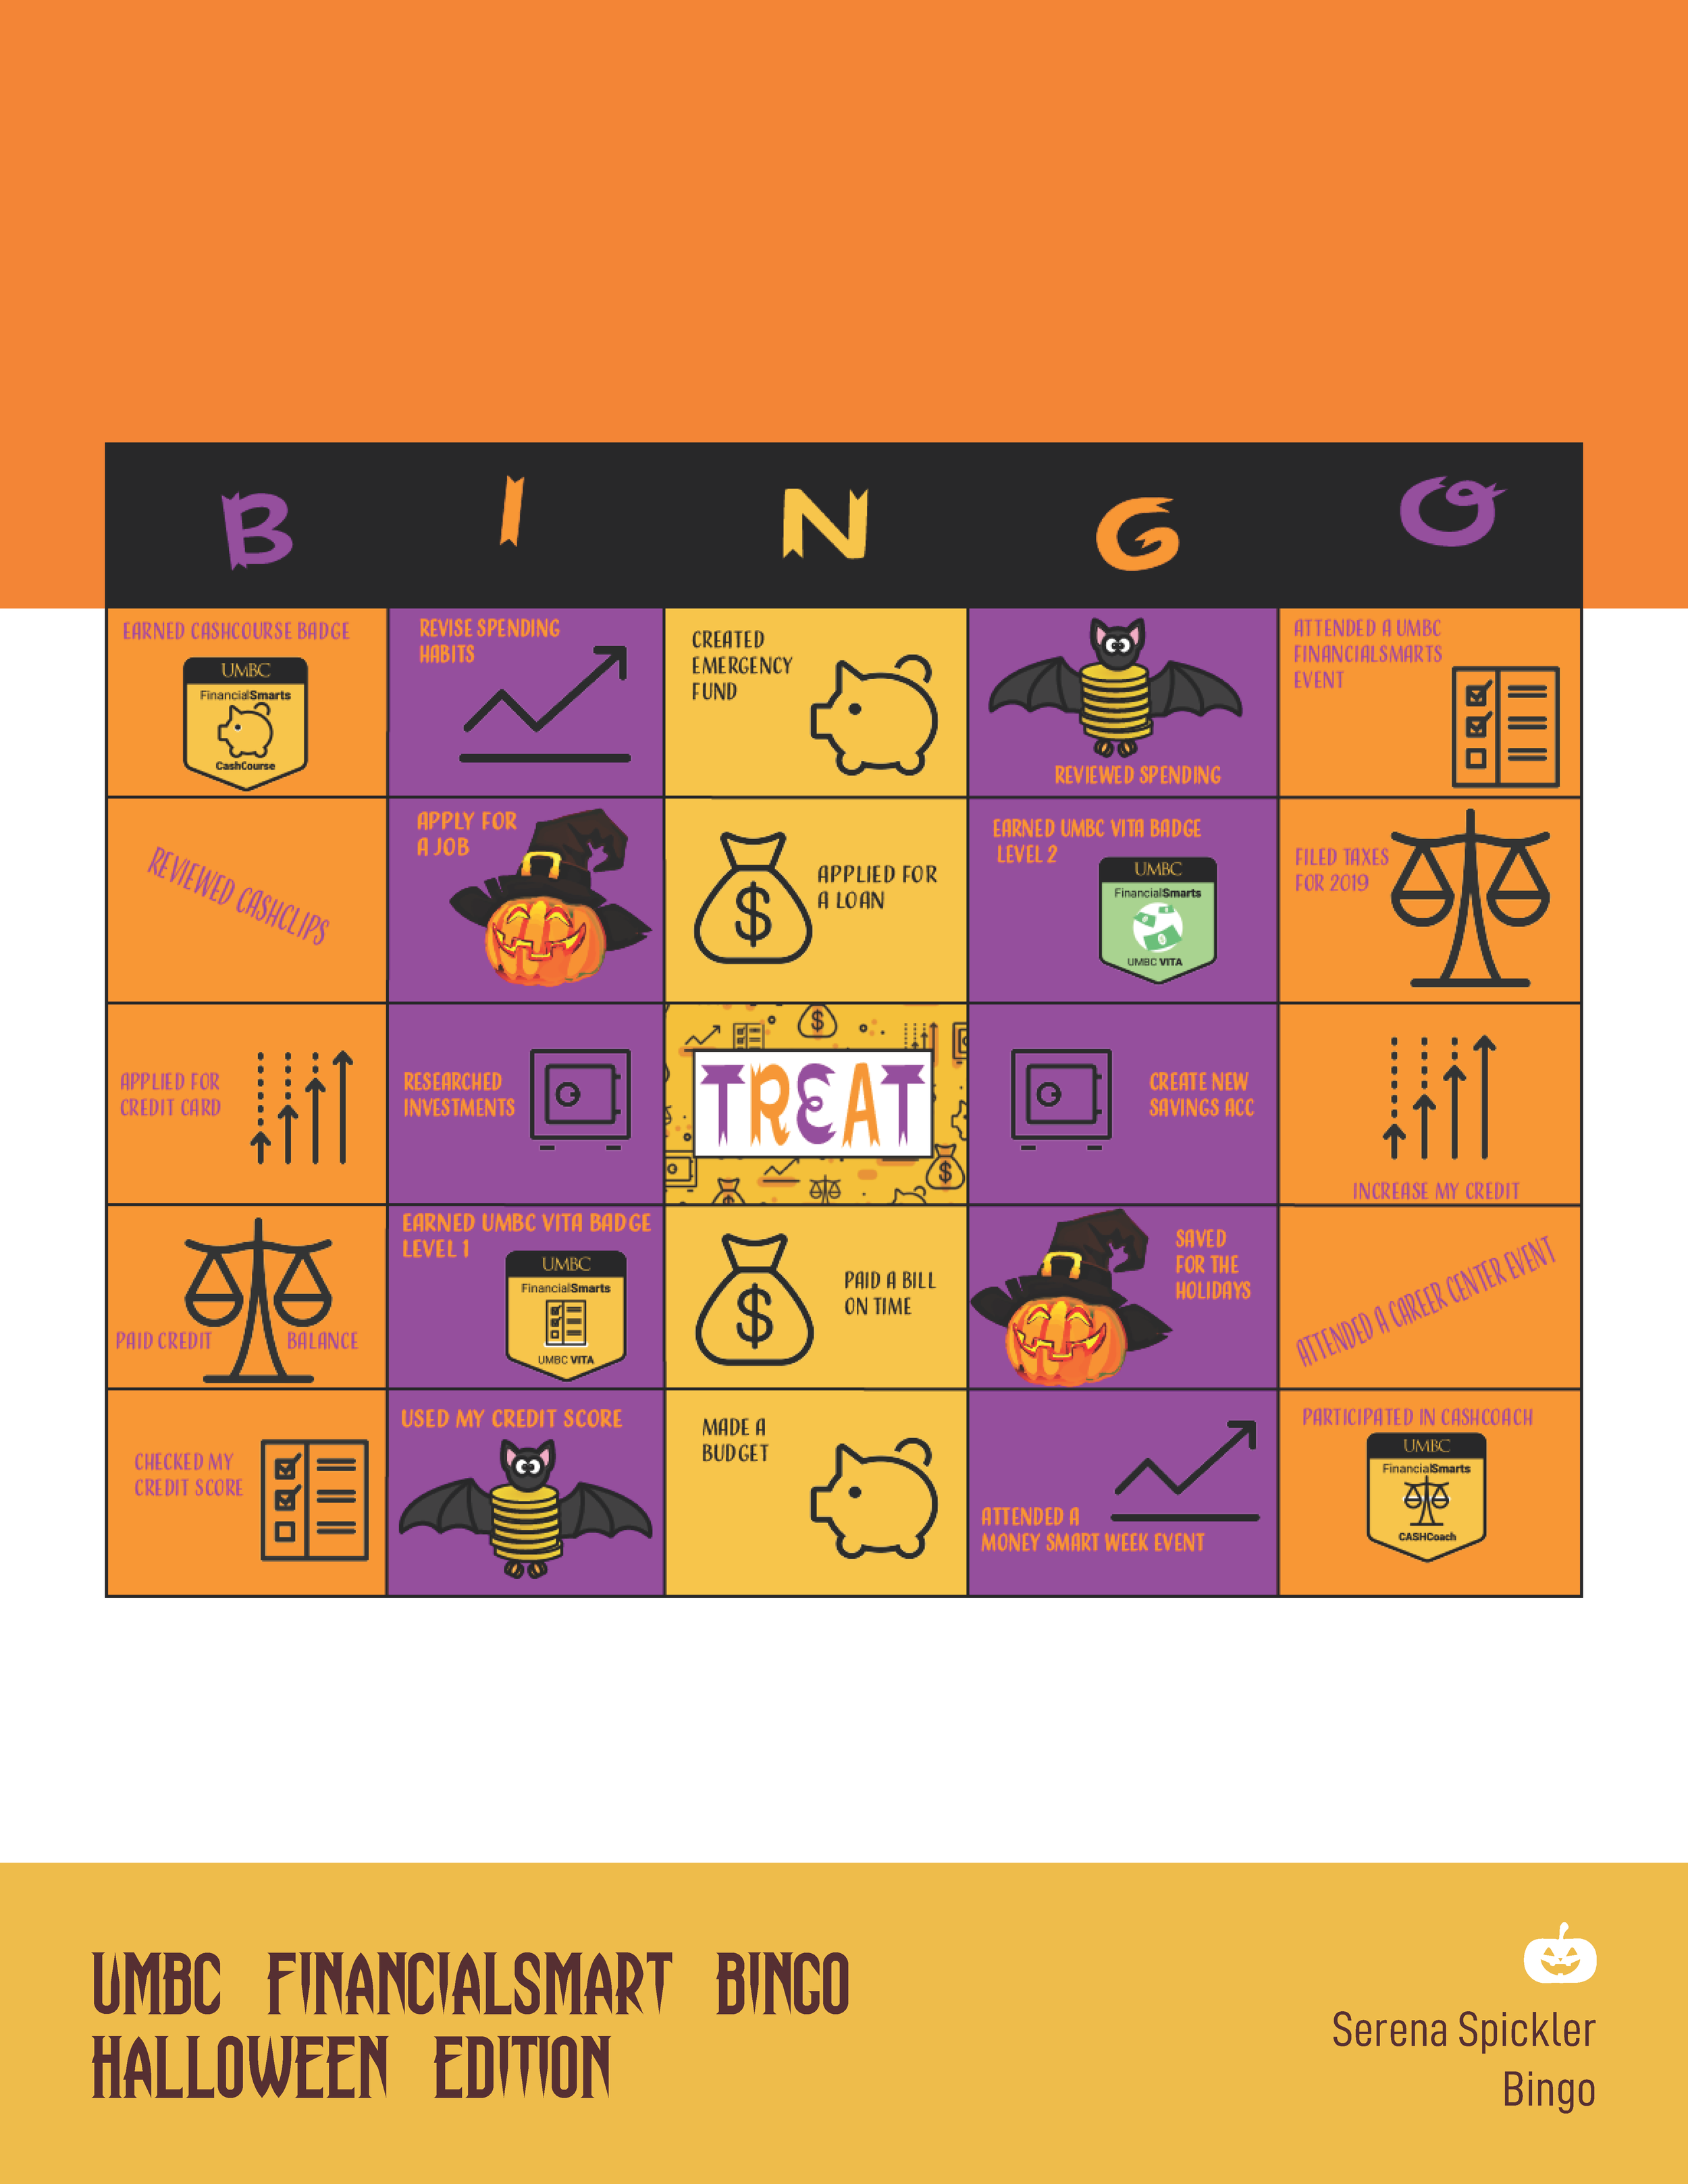 UMBC FinancialSmarts Bingo - Halloween Edition